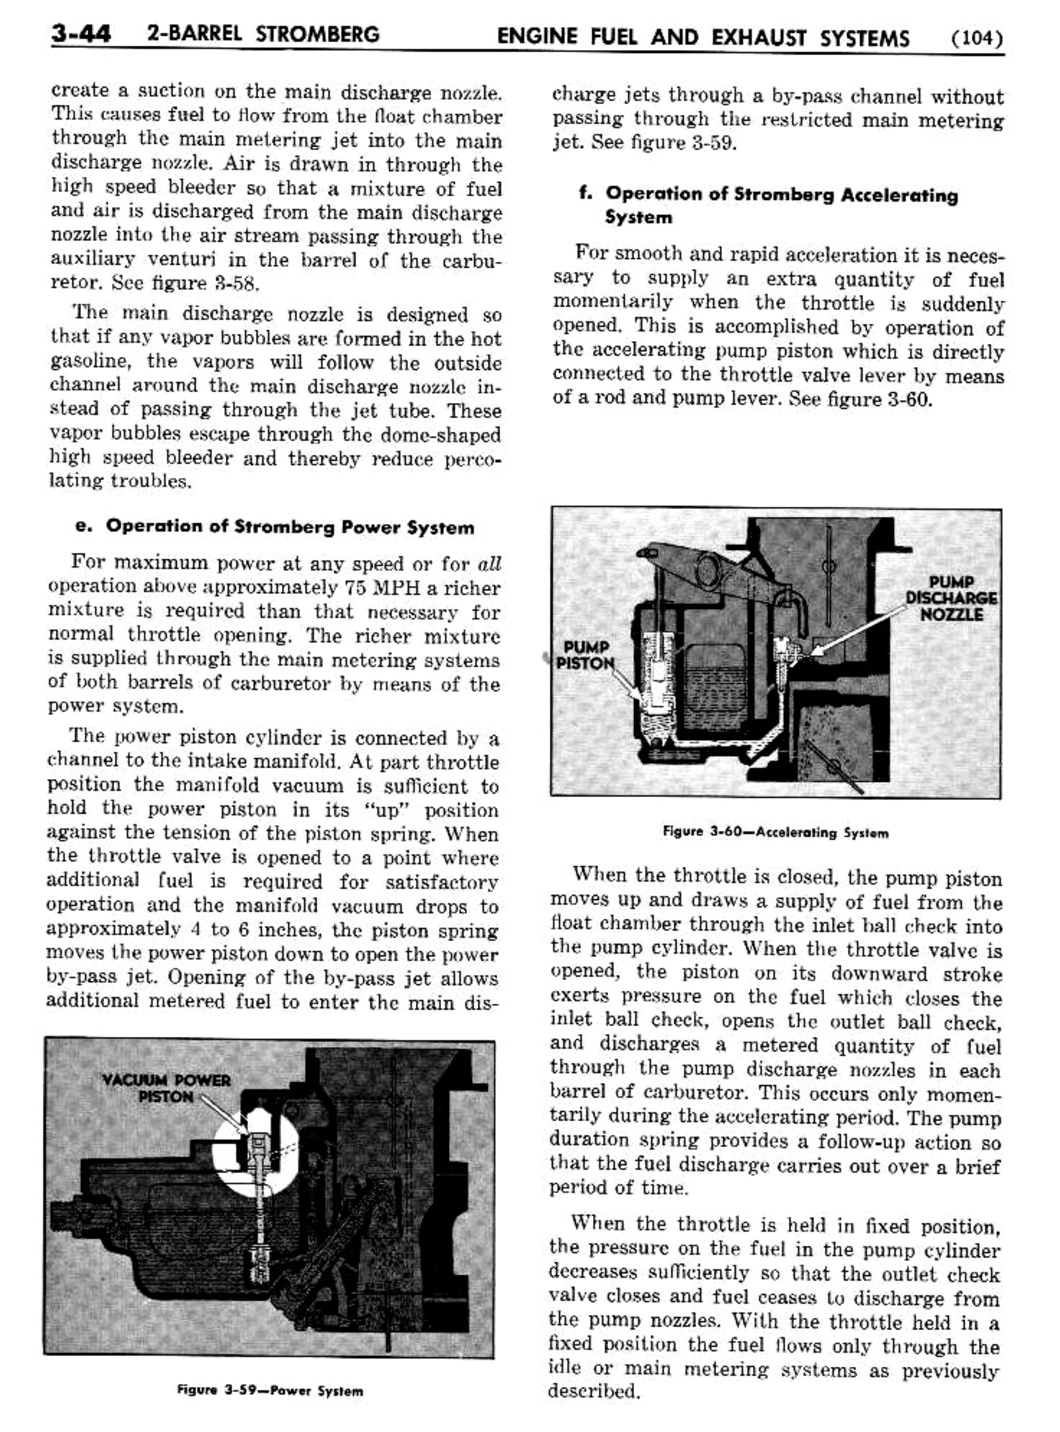 n_04 1956 Buick Shop Manual - Engine Fuel & Exhaust-044-044.jpg